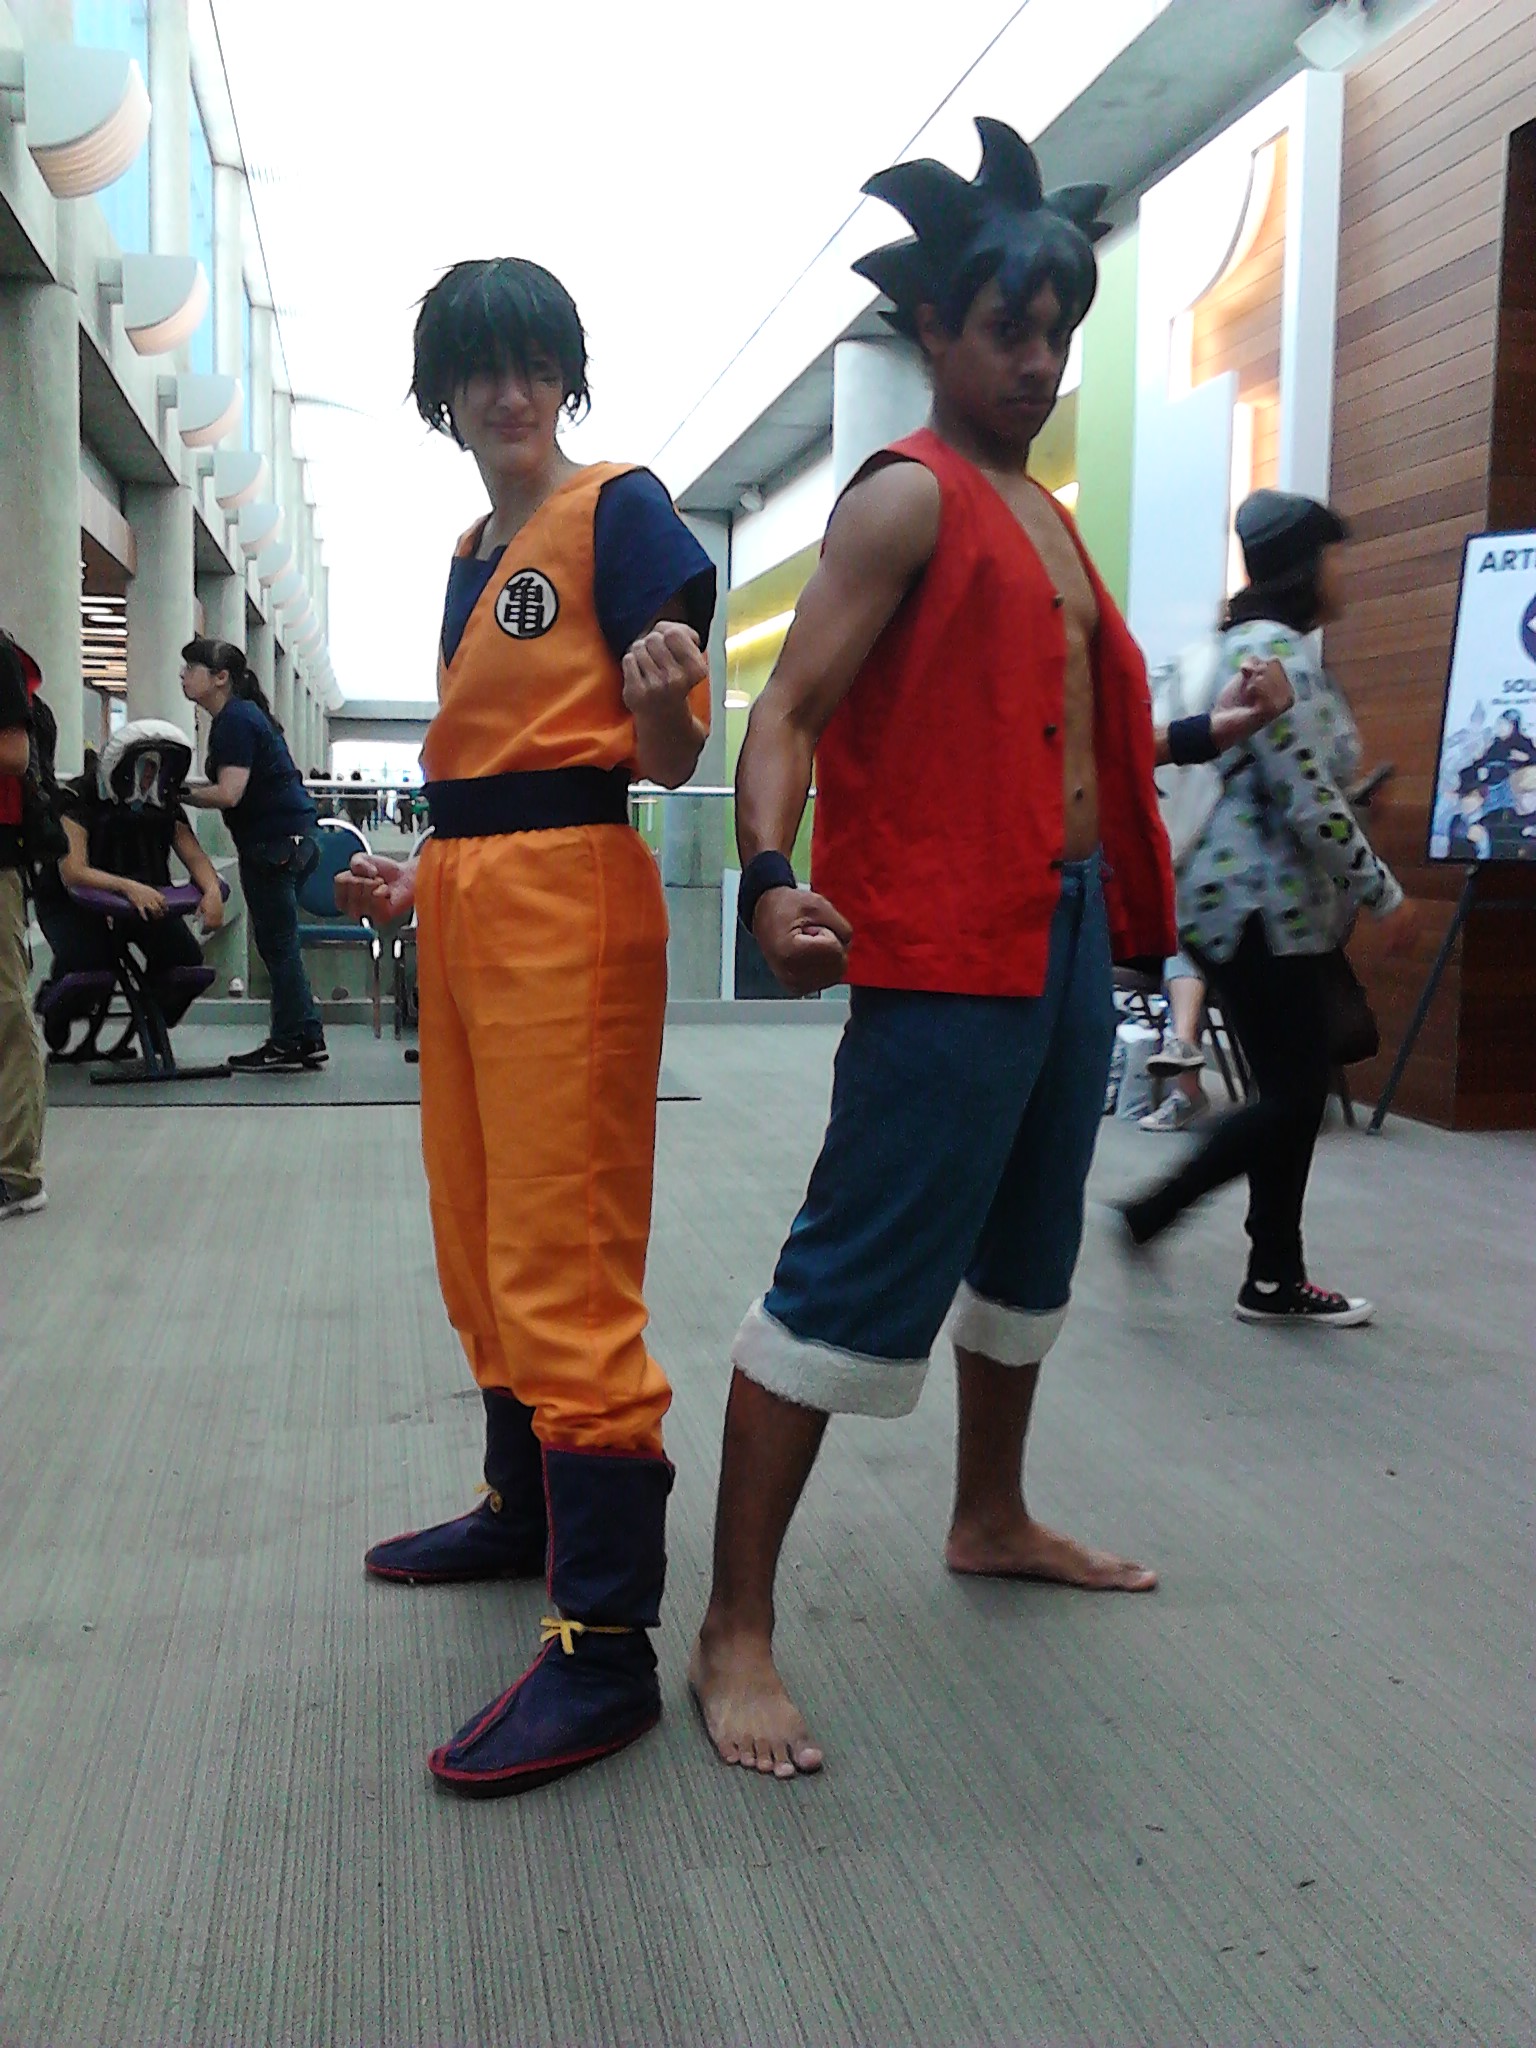 Dragon Ball Super Goku Black Cosplay Costume